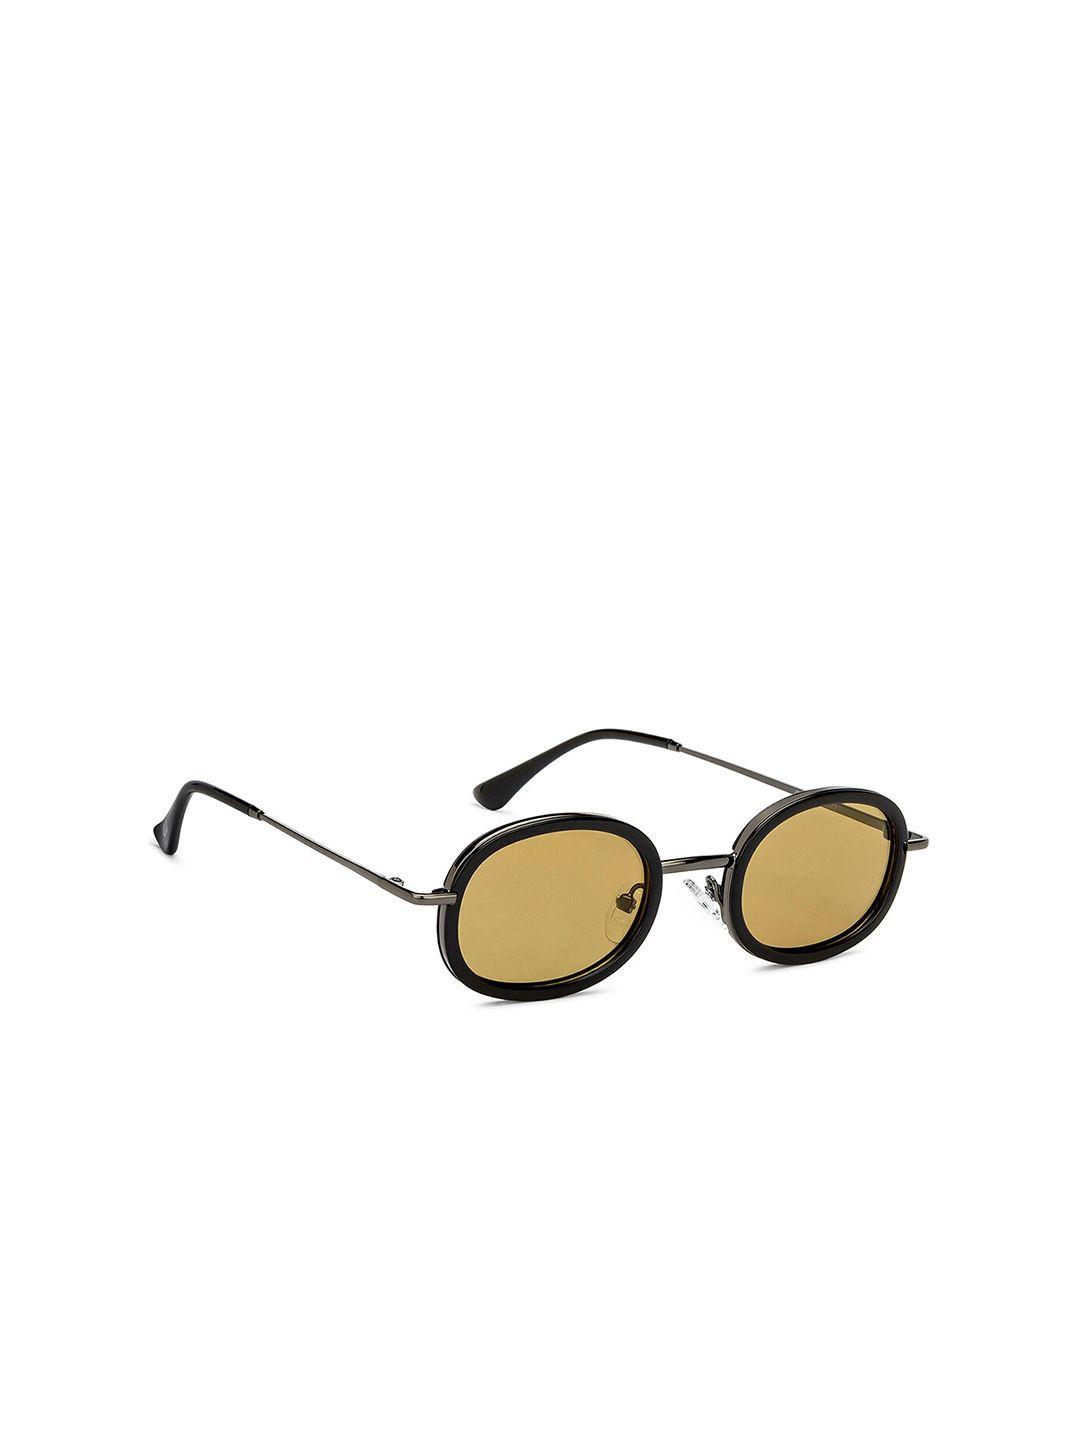 lenskart studio unisex round sunglasses with polarised and uv protected lens